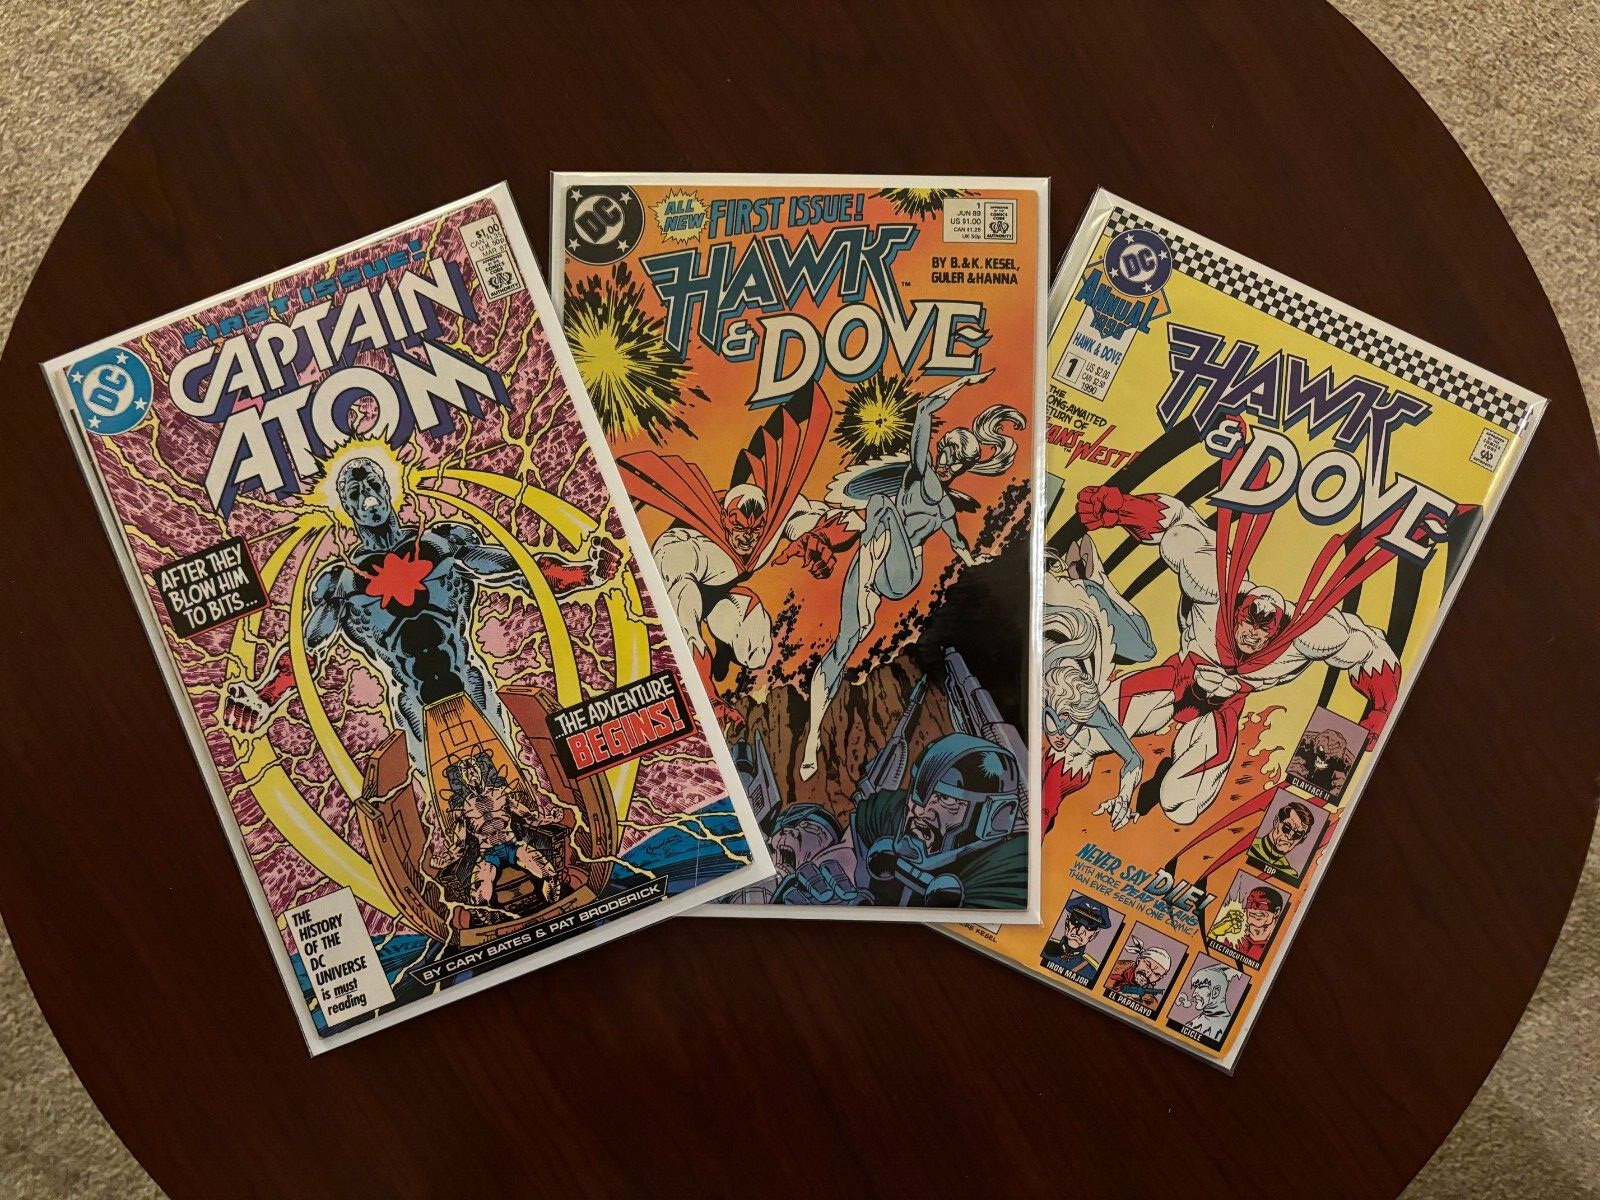 (Lot of 3 #1 DC Comics) Captain Atom #1 Hawk & Dove #1 & Hawk & Dove Annual #1